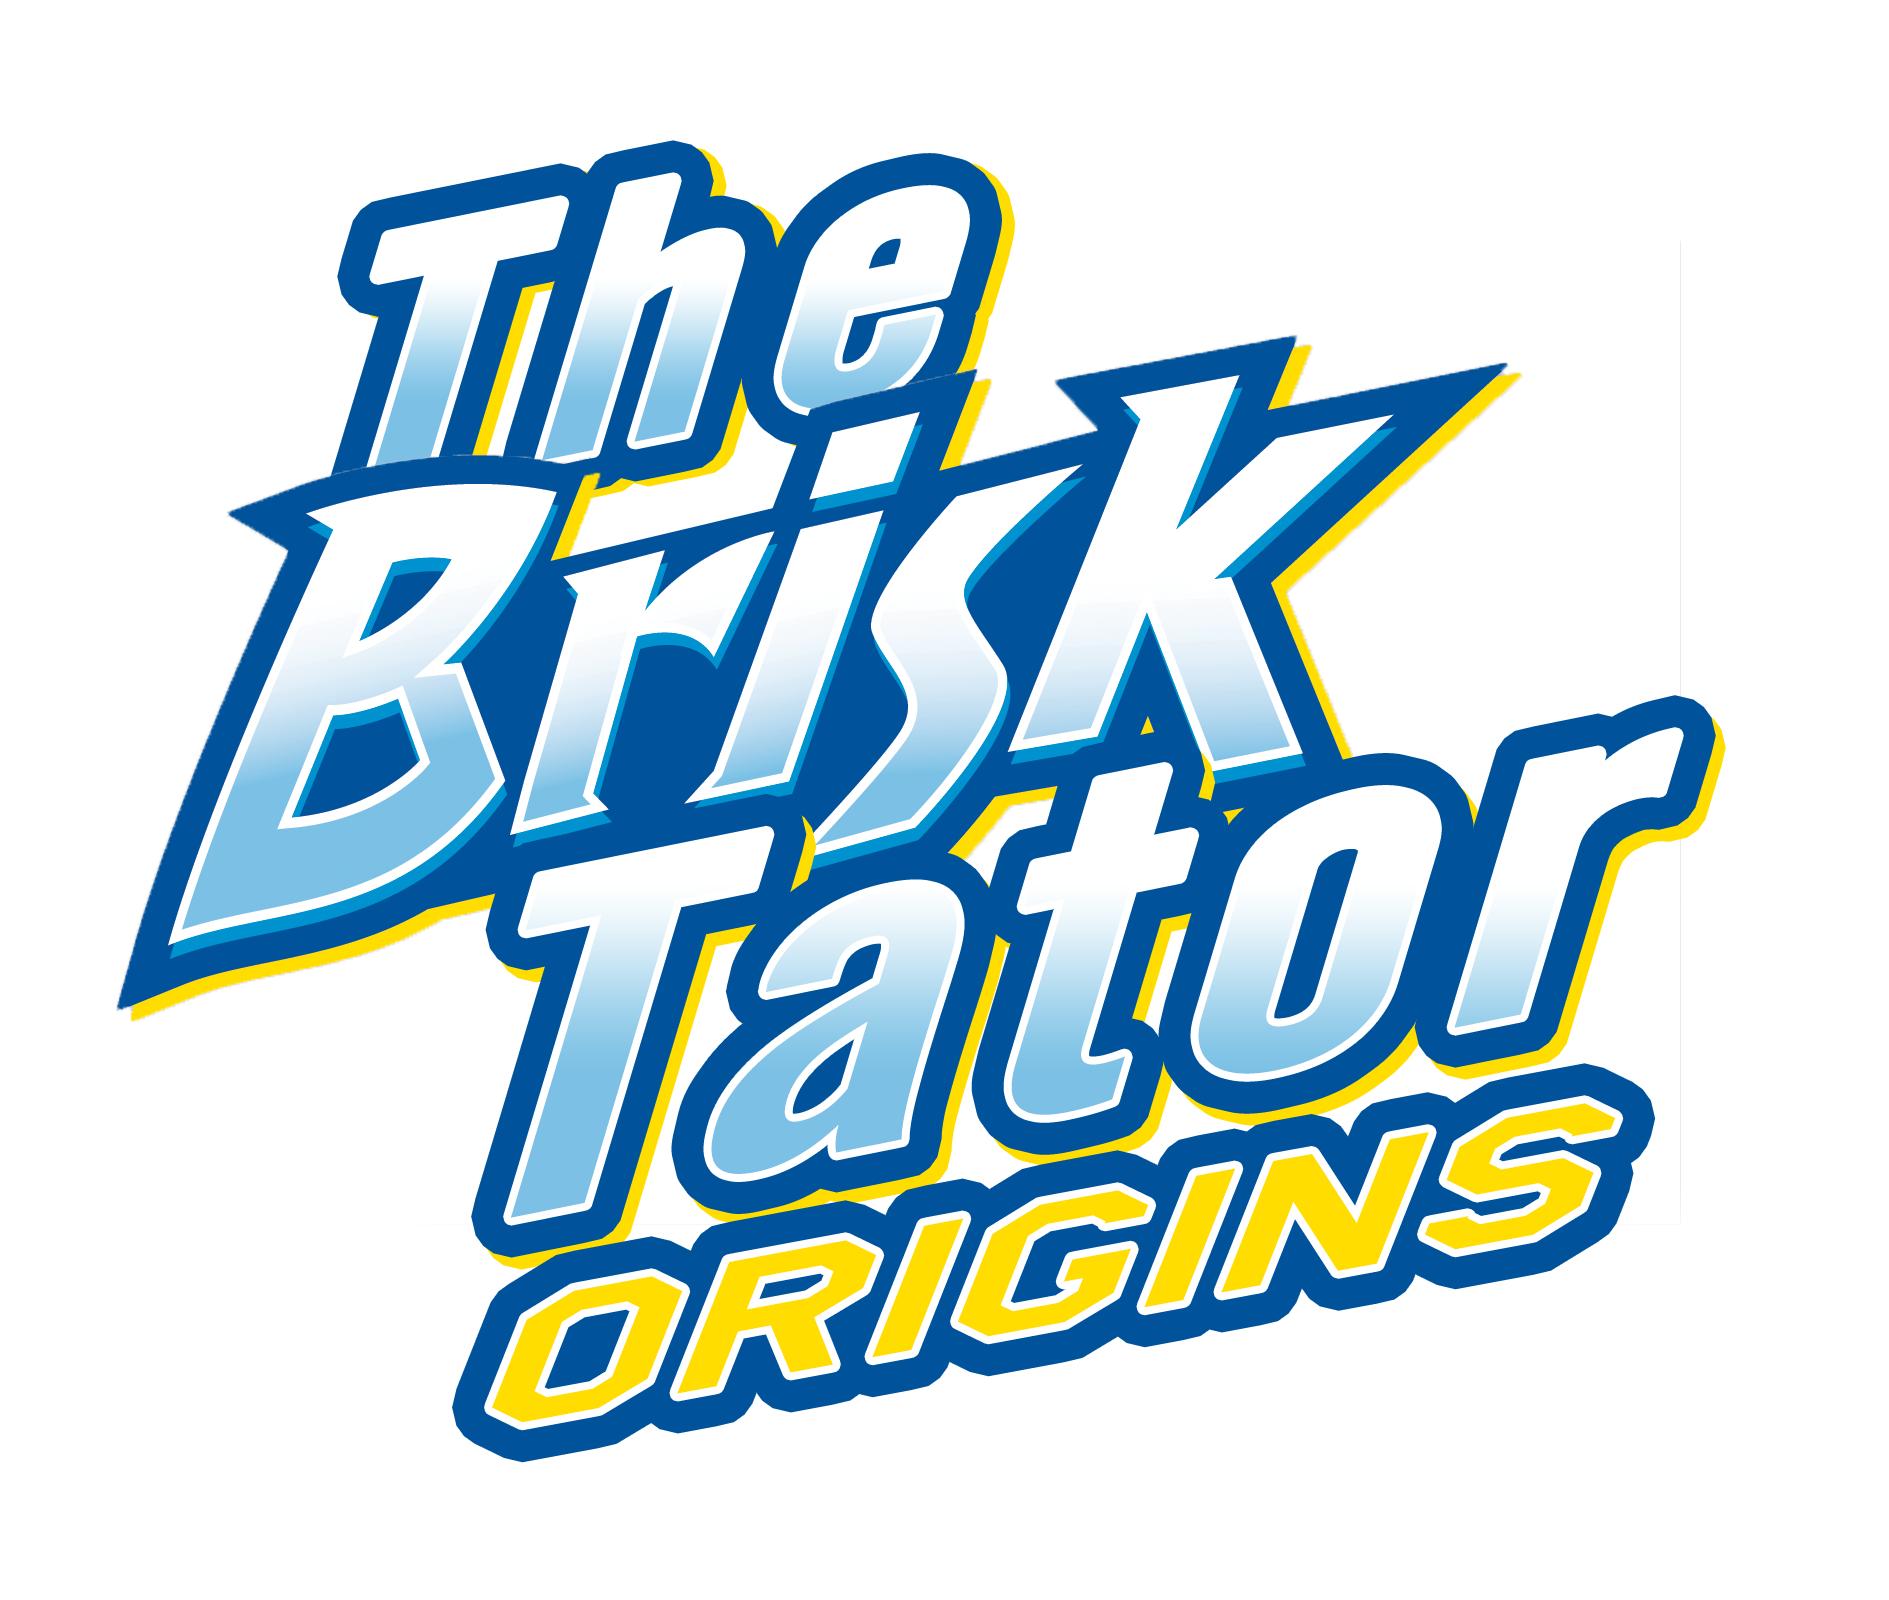 The Brisktator: Origins